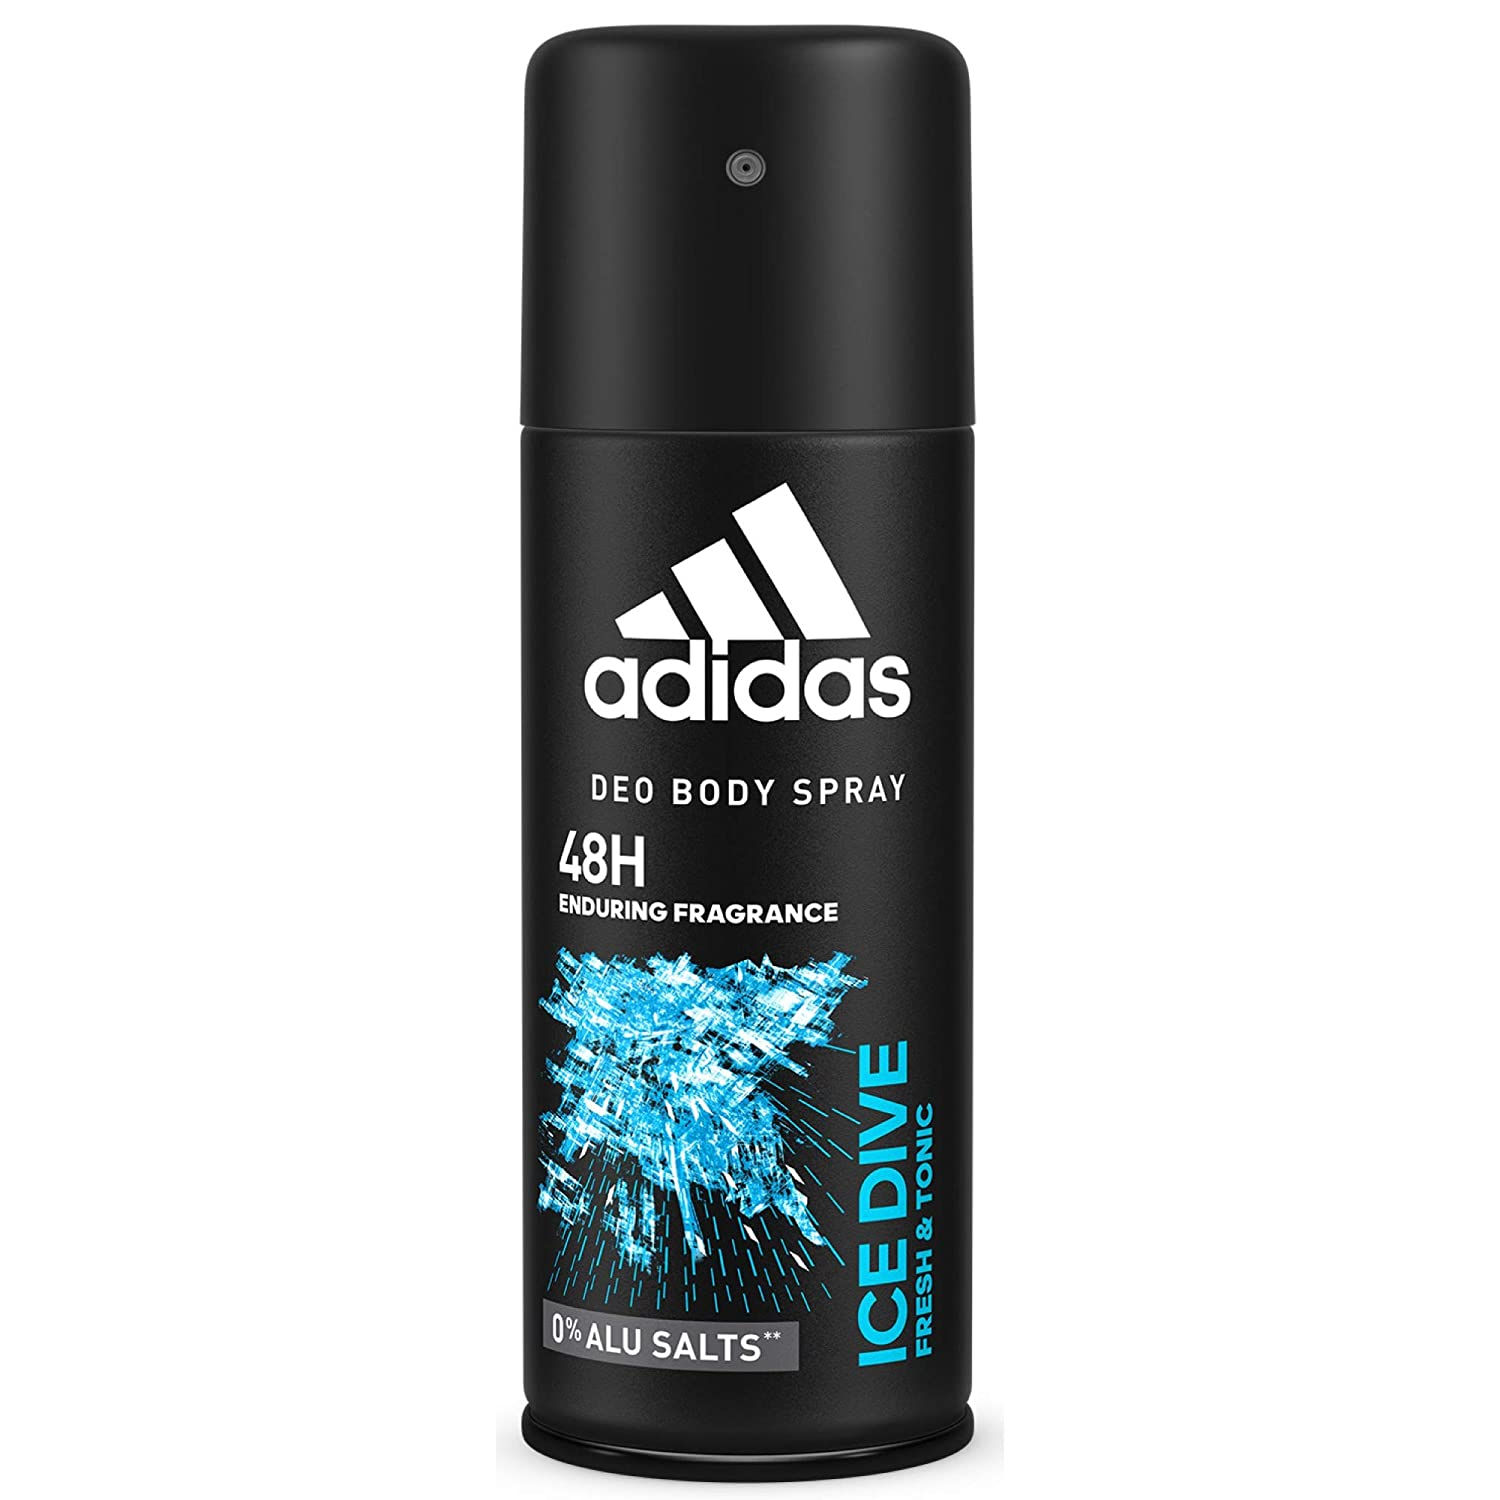 adidas ice effect deodorant